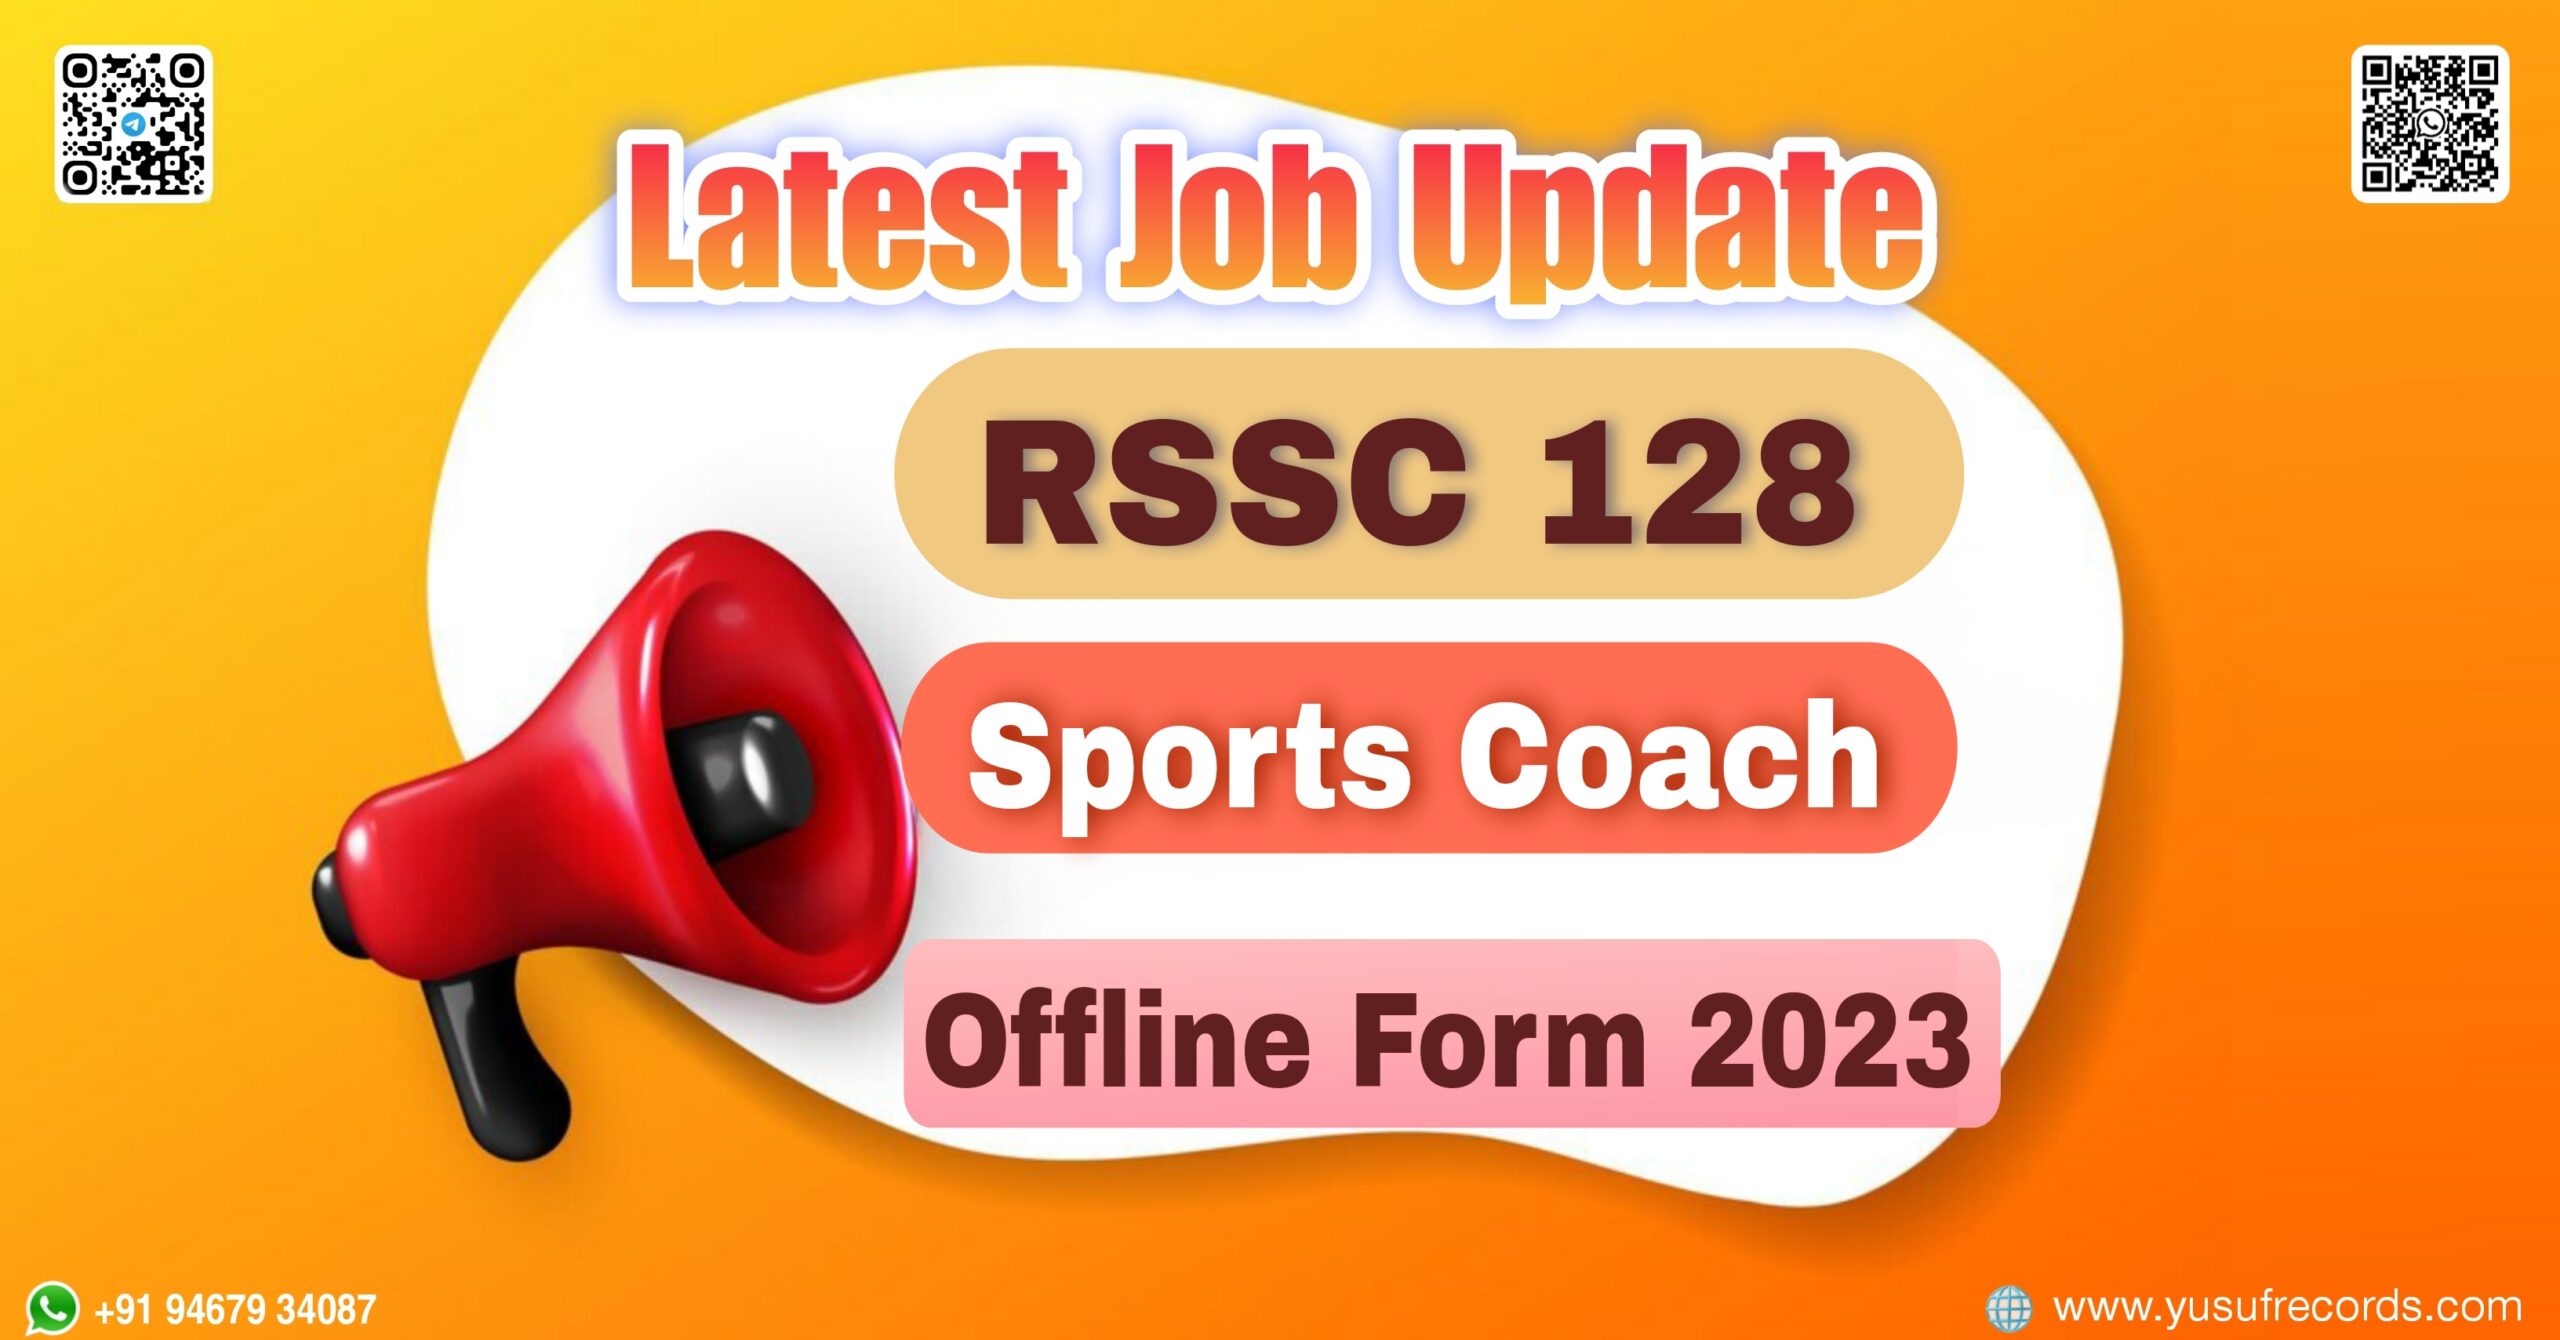 RSSC 128 Sports Coach Vacancy Offline Form yusufrecords